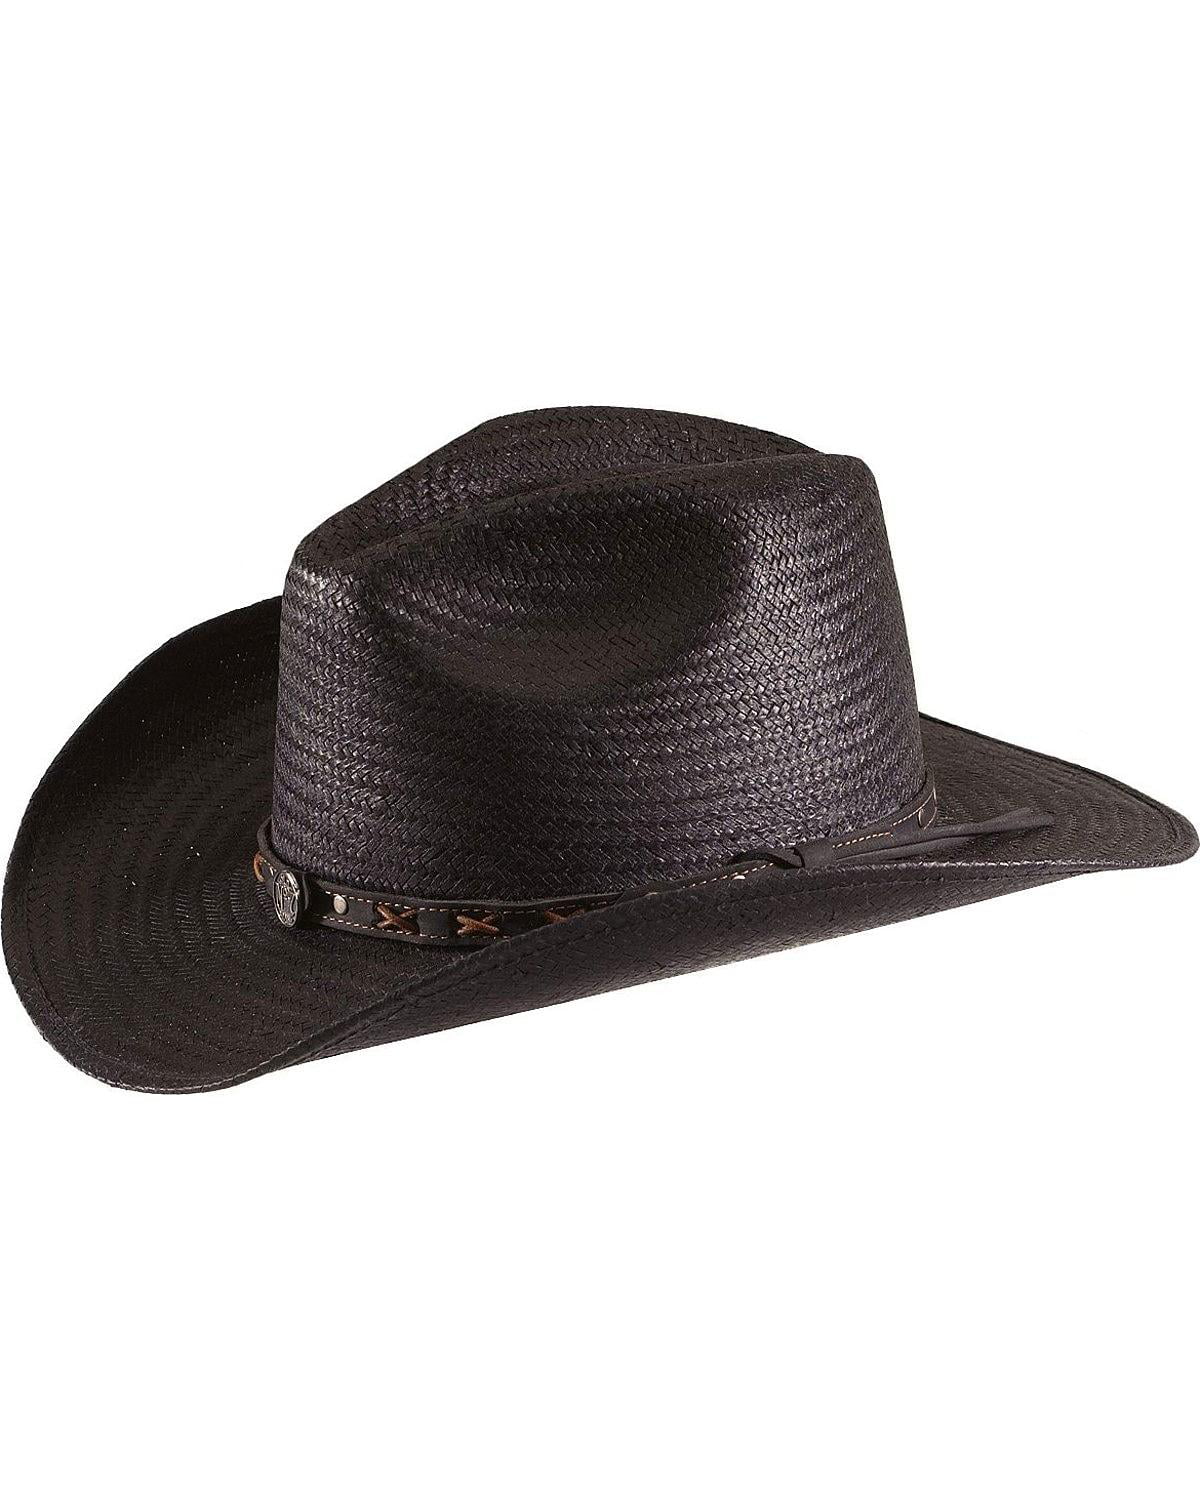 Jack Daniel's Straw Cowboy Hat JD03-62 